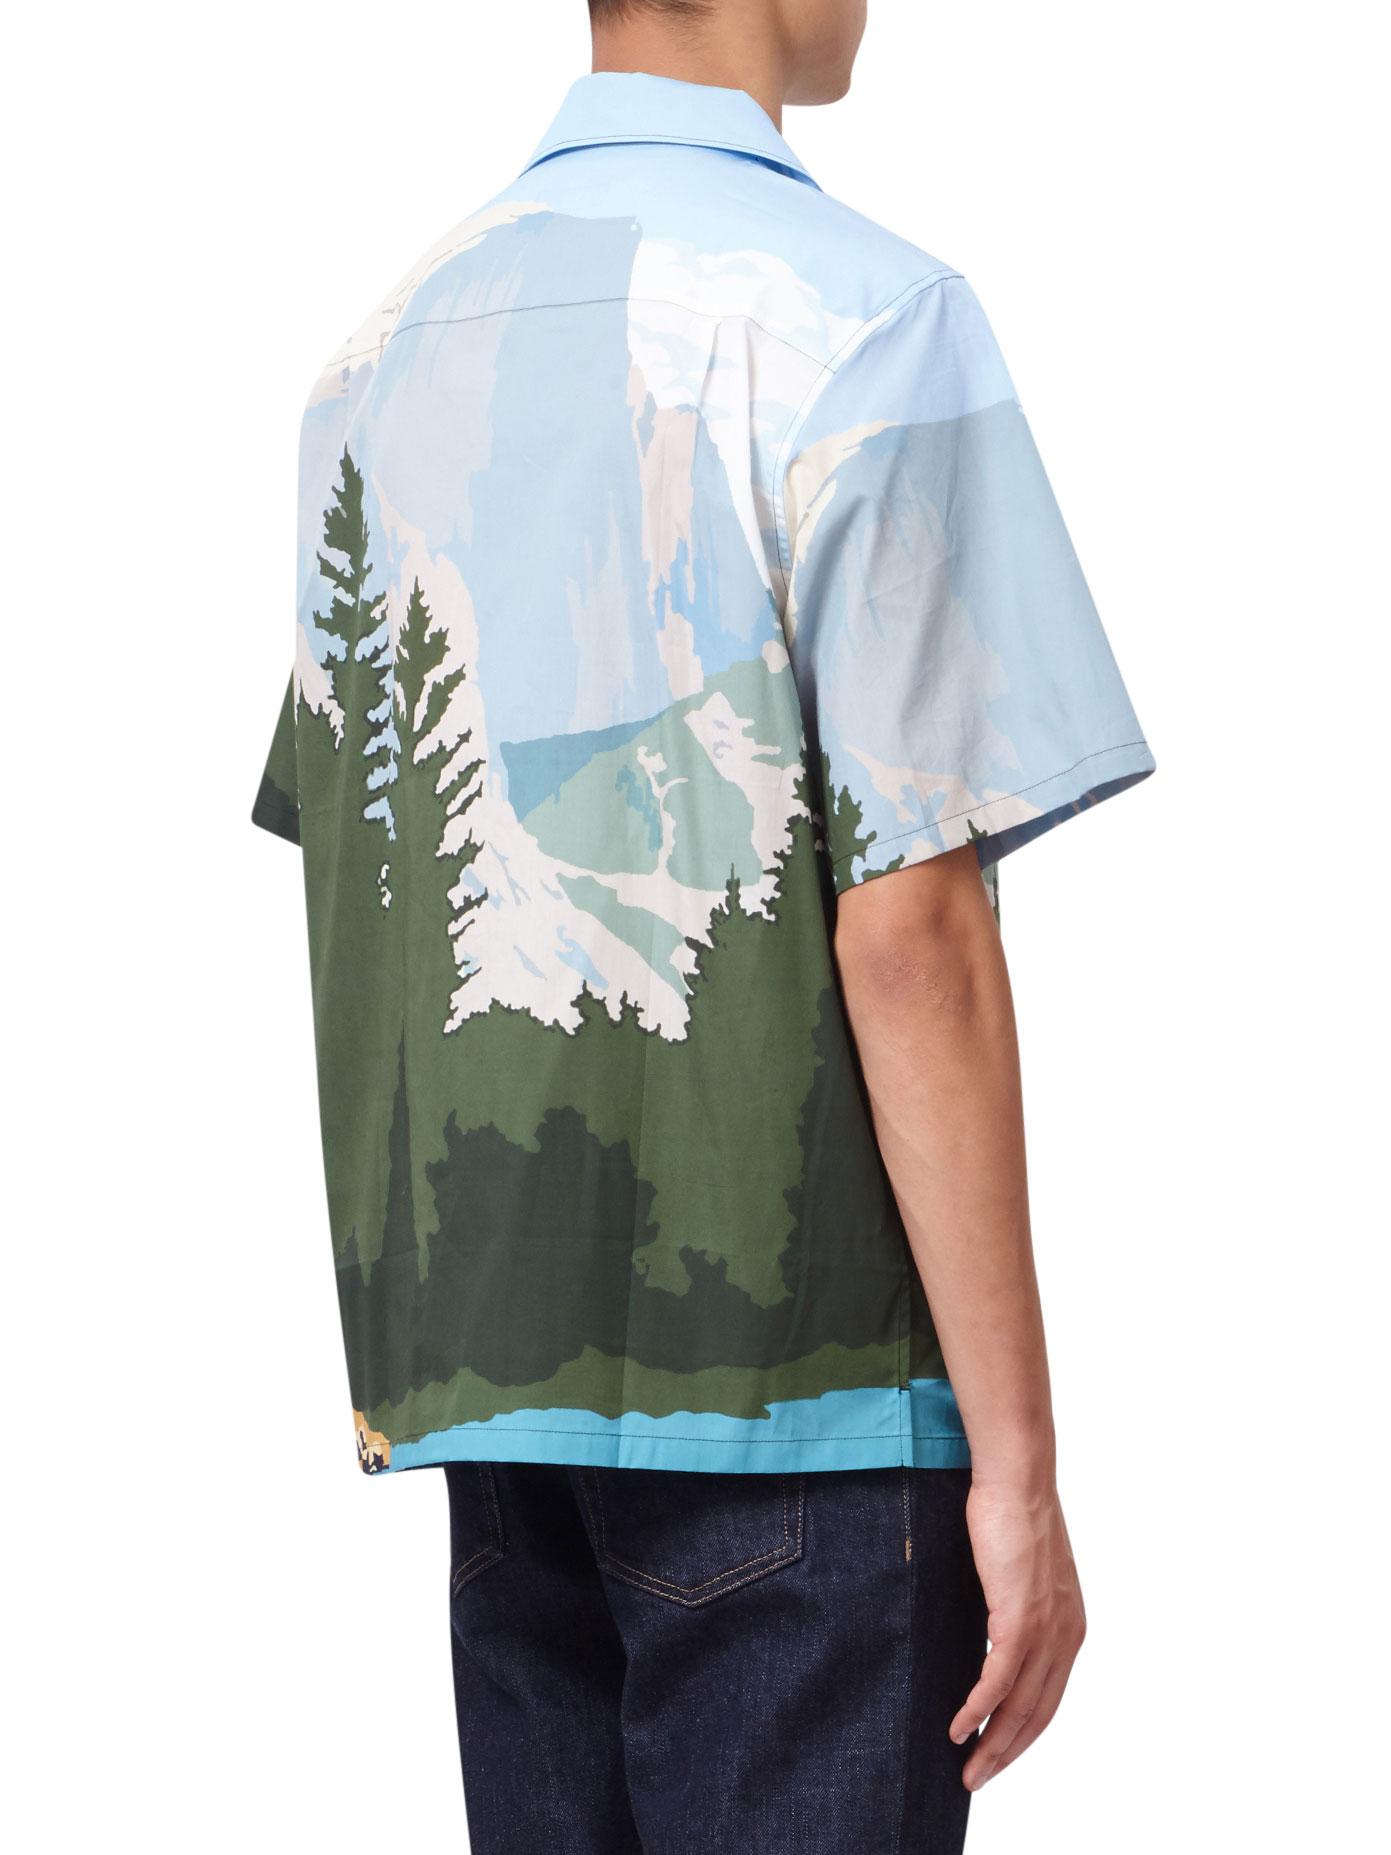 Prada Mountain Print Cotton Shirt for Men - Lyst